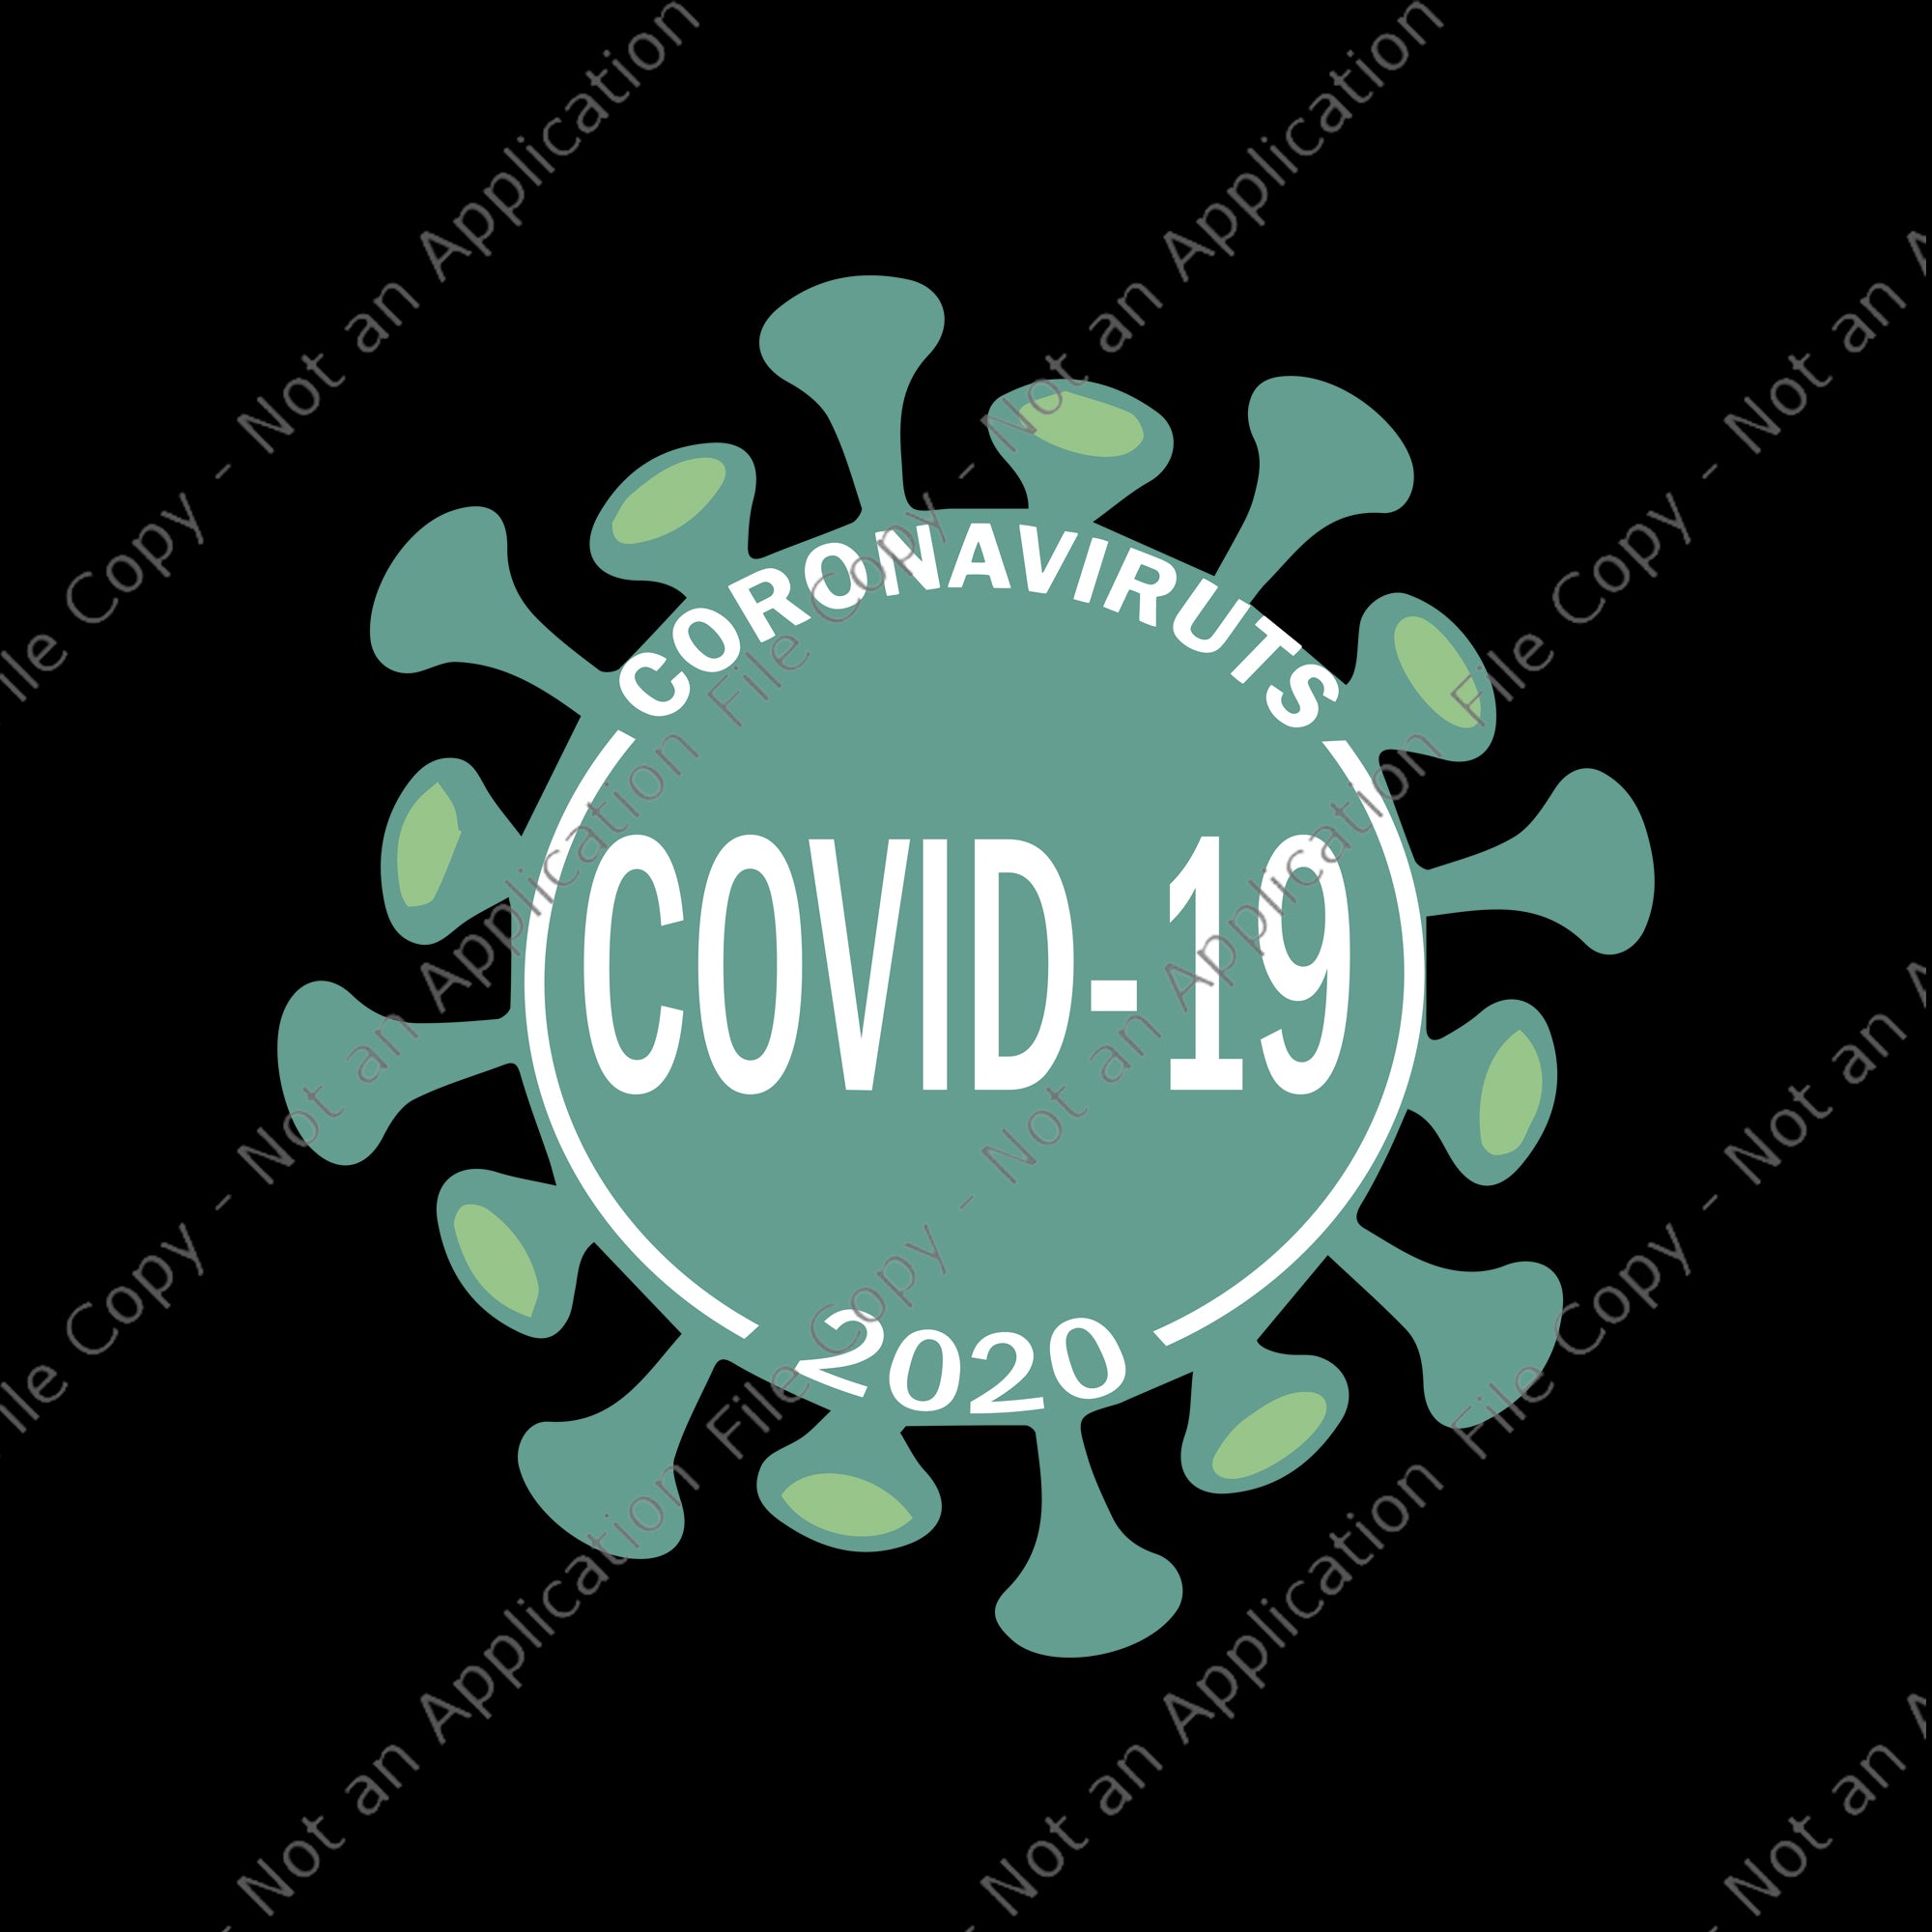 Corona viruts covid-19 2020 svg, corona viruts svg, covid-19 svg, corona 2020, covid-19, viruts corona  png, eps, dxf, svg file